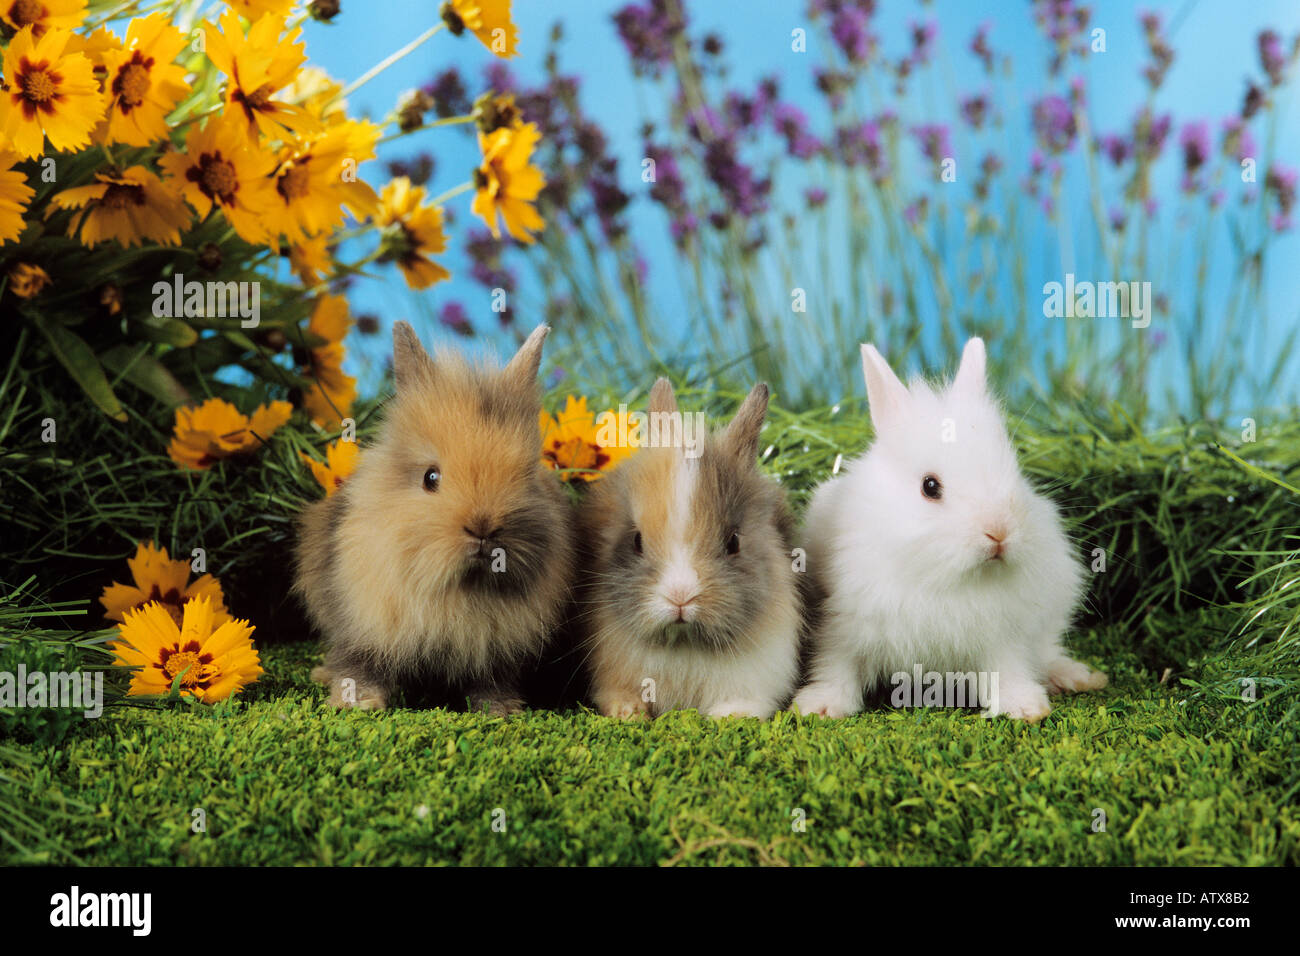 three young pygmy rabbits besides flowers / Sylilagus idahoensis / Brachylagus idahoensis Stock Photo